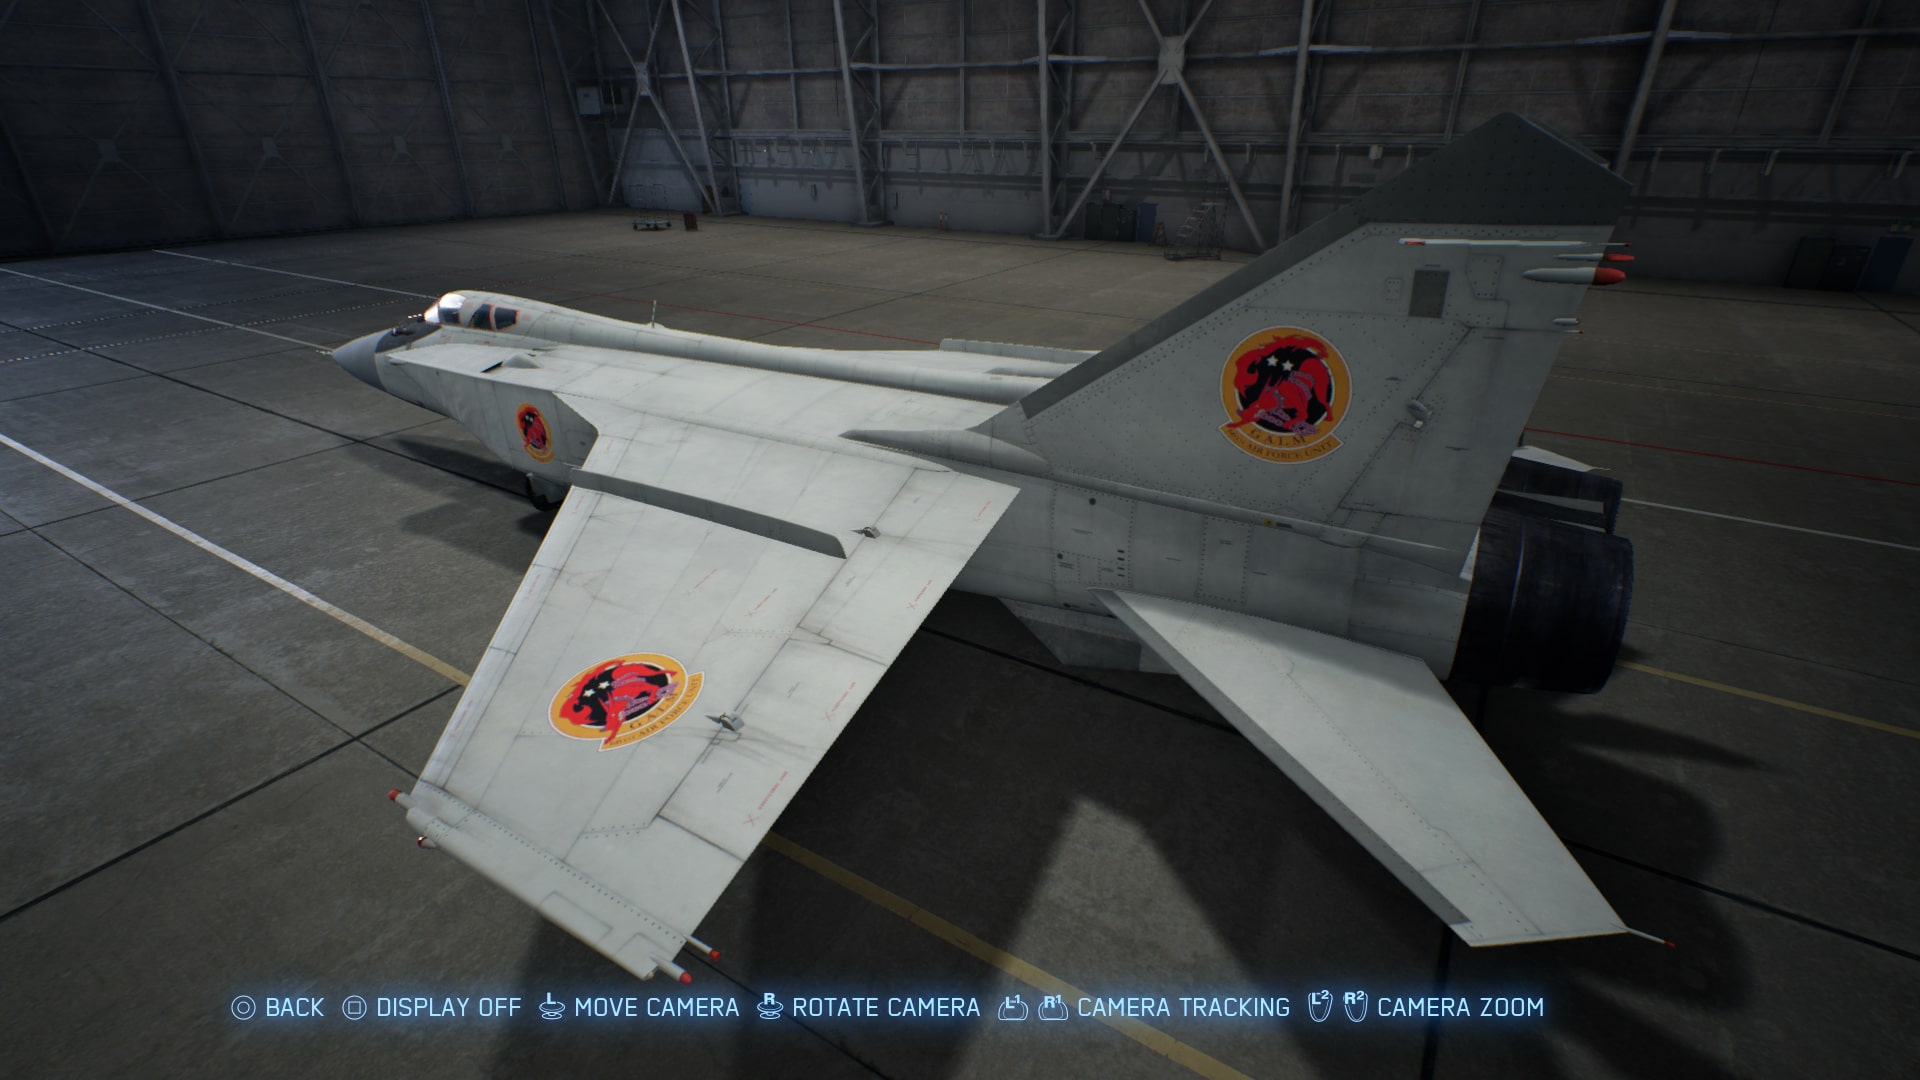 Ace Combat 7: Skies Unknown - ADFX-01 Morgan Set - Metacritic